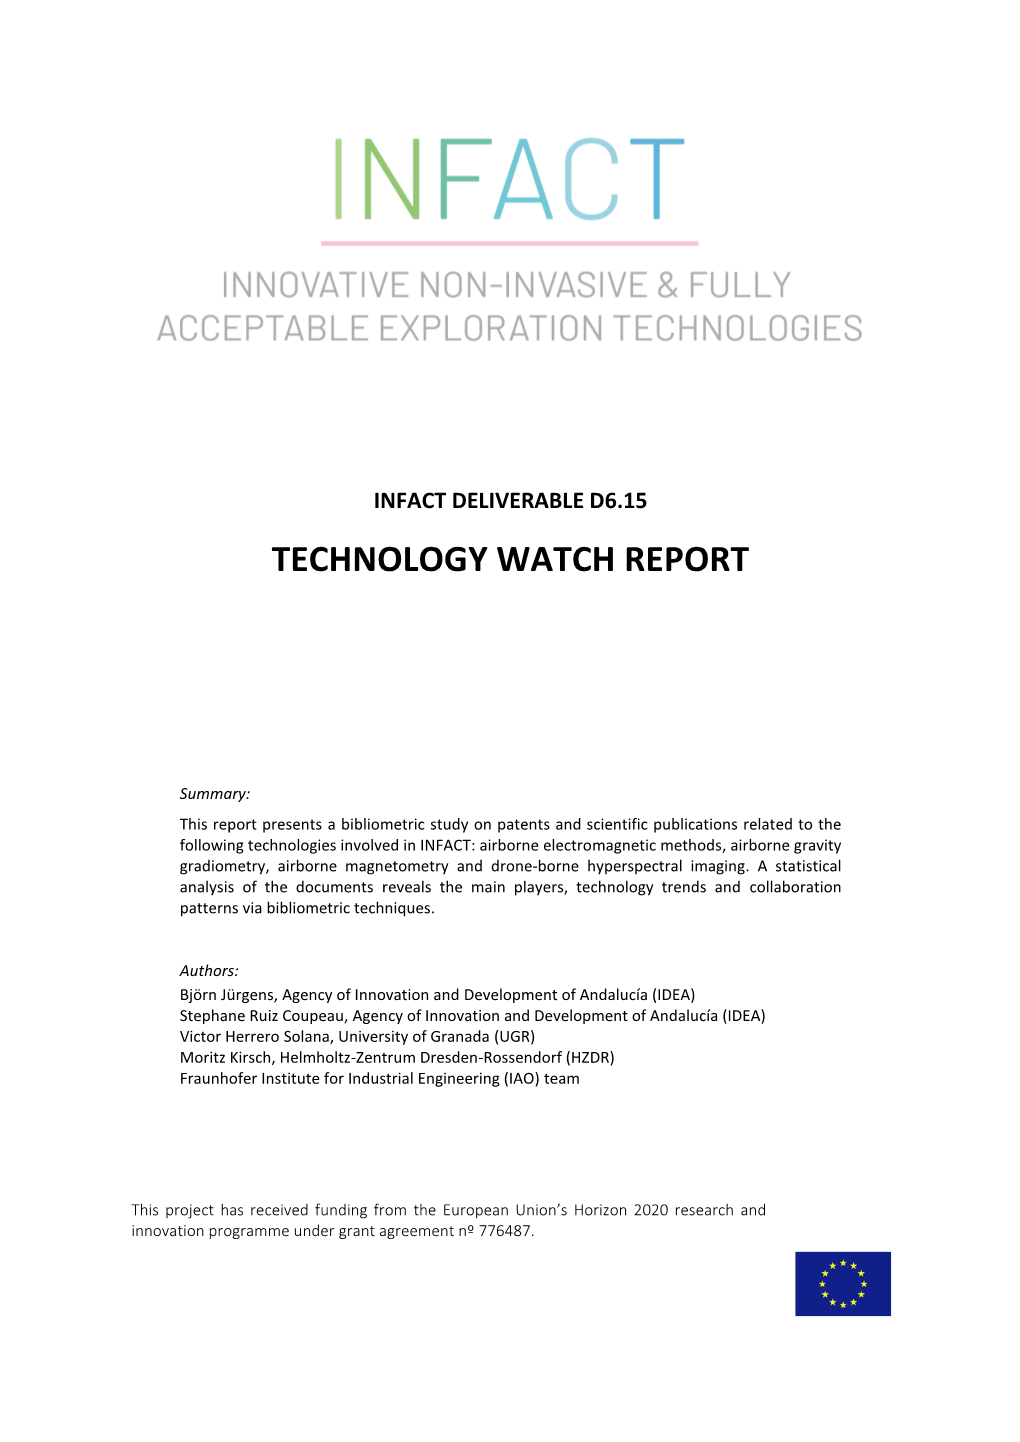 INFACT Technology Watch